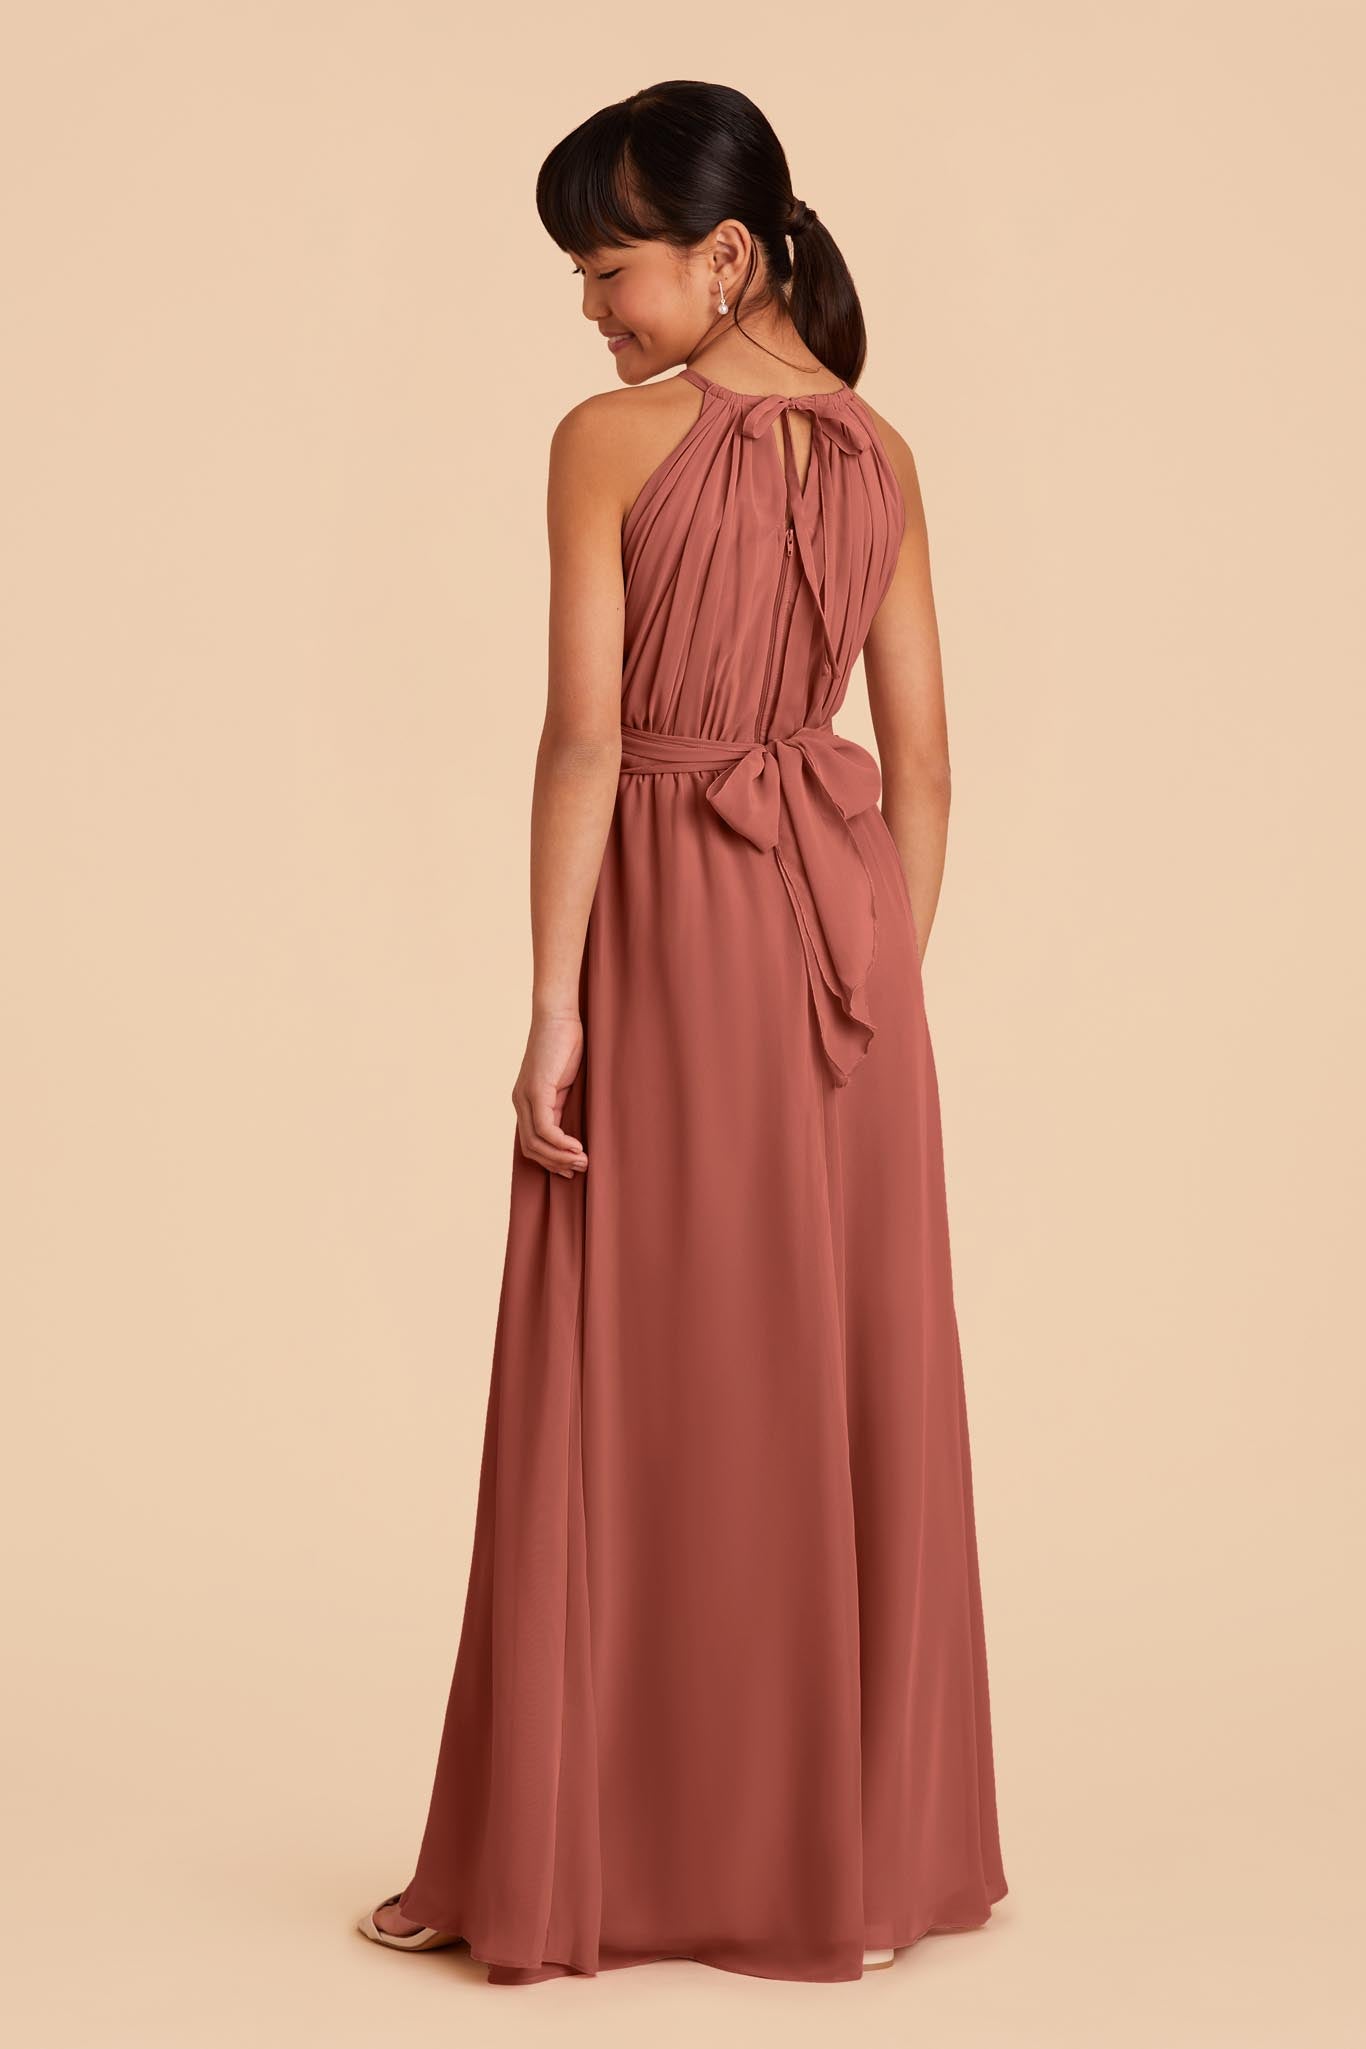 Desert Rose Sienna Junior Dress by Birdy Grey